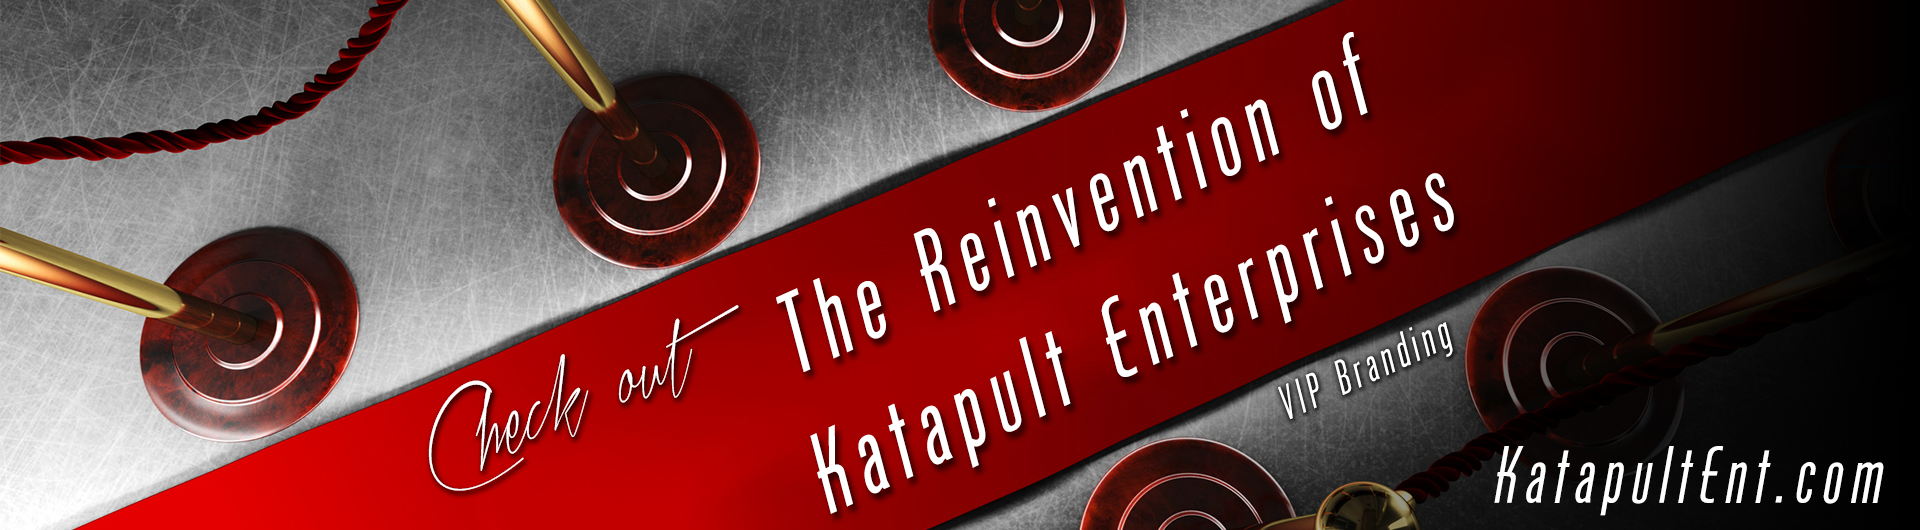 reinvention of katapult